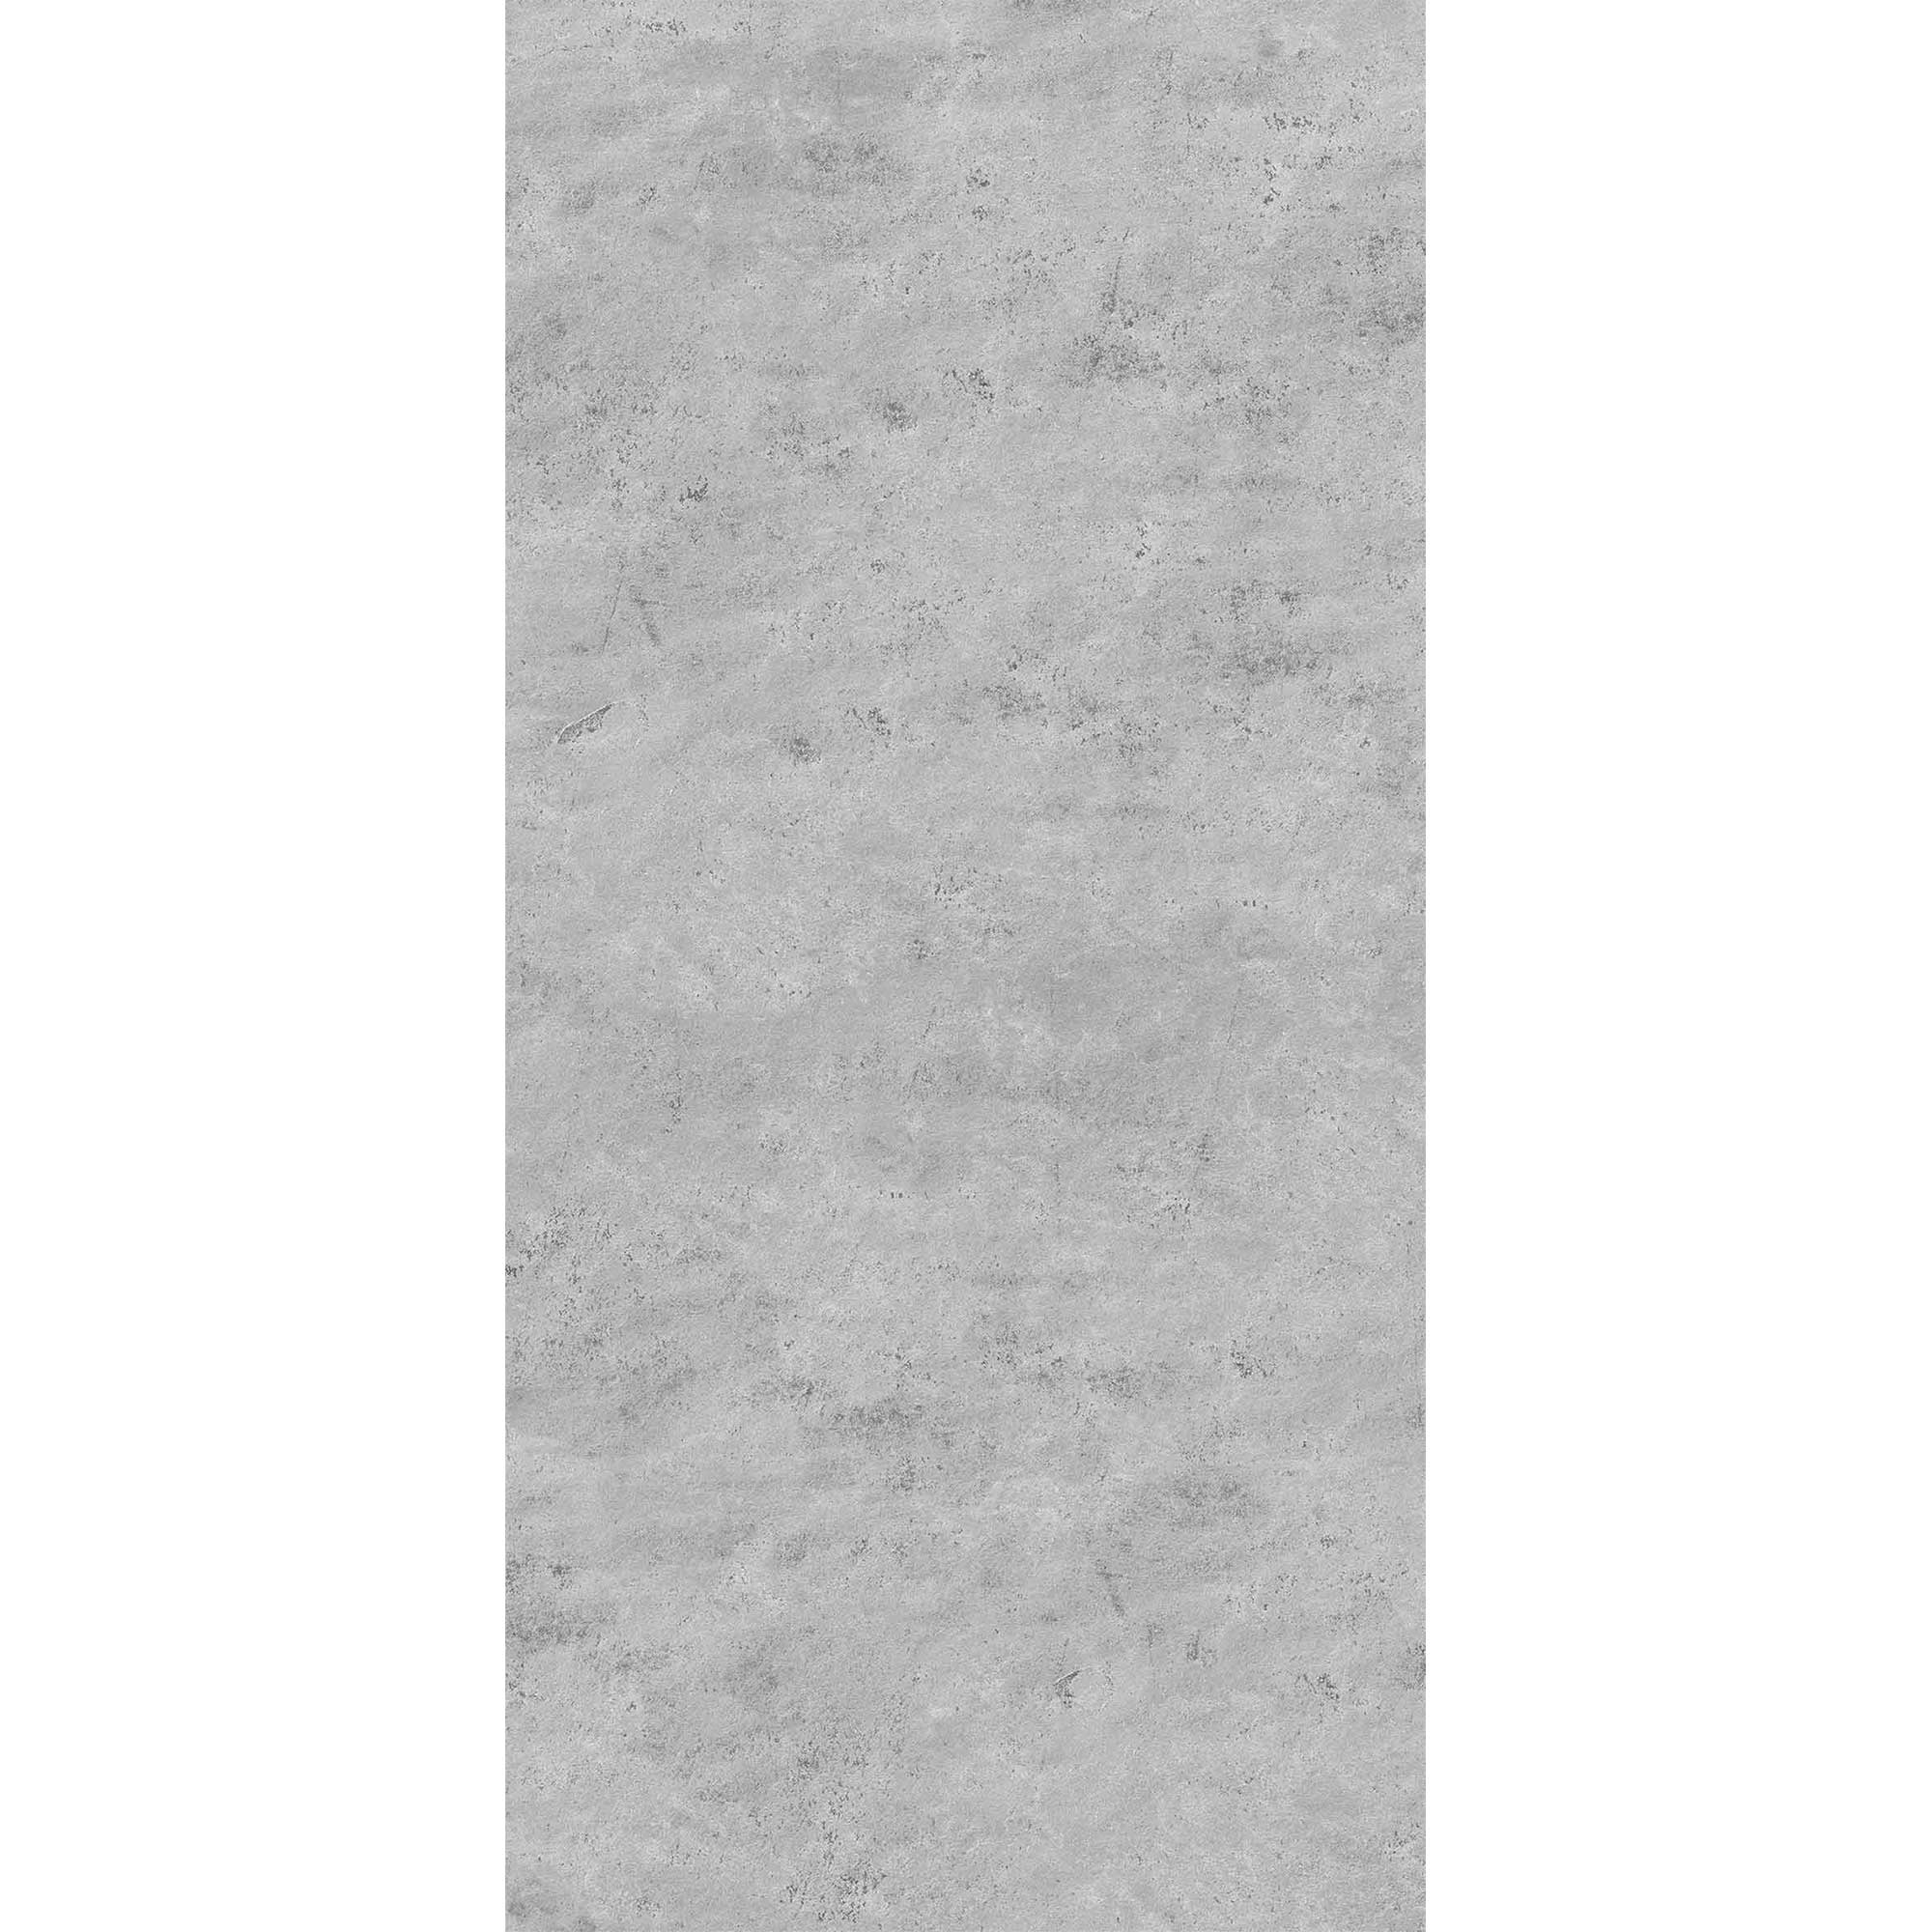 Duschrückwand hochglanz Marmoroptik grau 100 x 255 cm + product picture